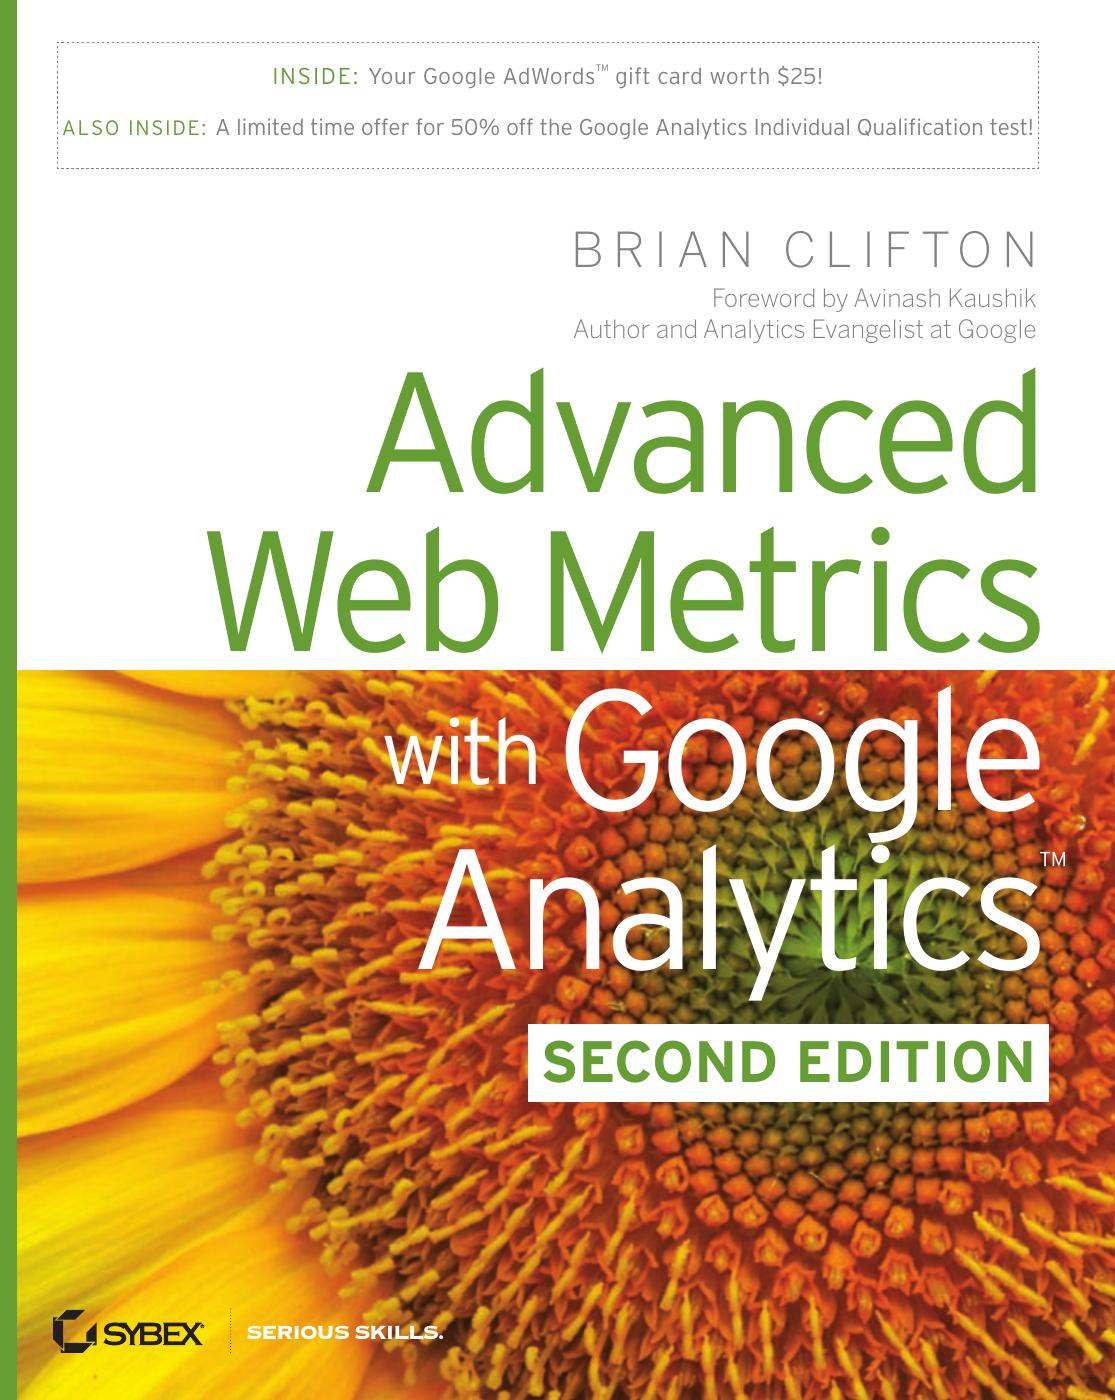 Wiley - Advanced Web Metrics with Google Analytics 2nd Edition (2010) (ATTiCA) by Advanced Web Metrics & Google Analytics 2nd Edition (2010) (ATTiCA)